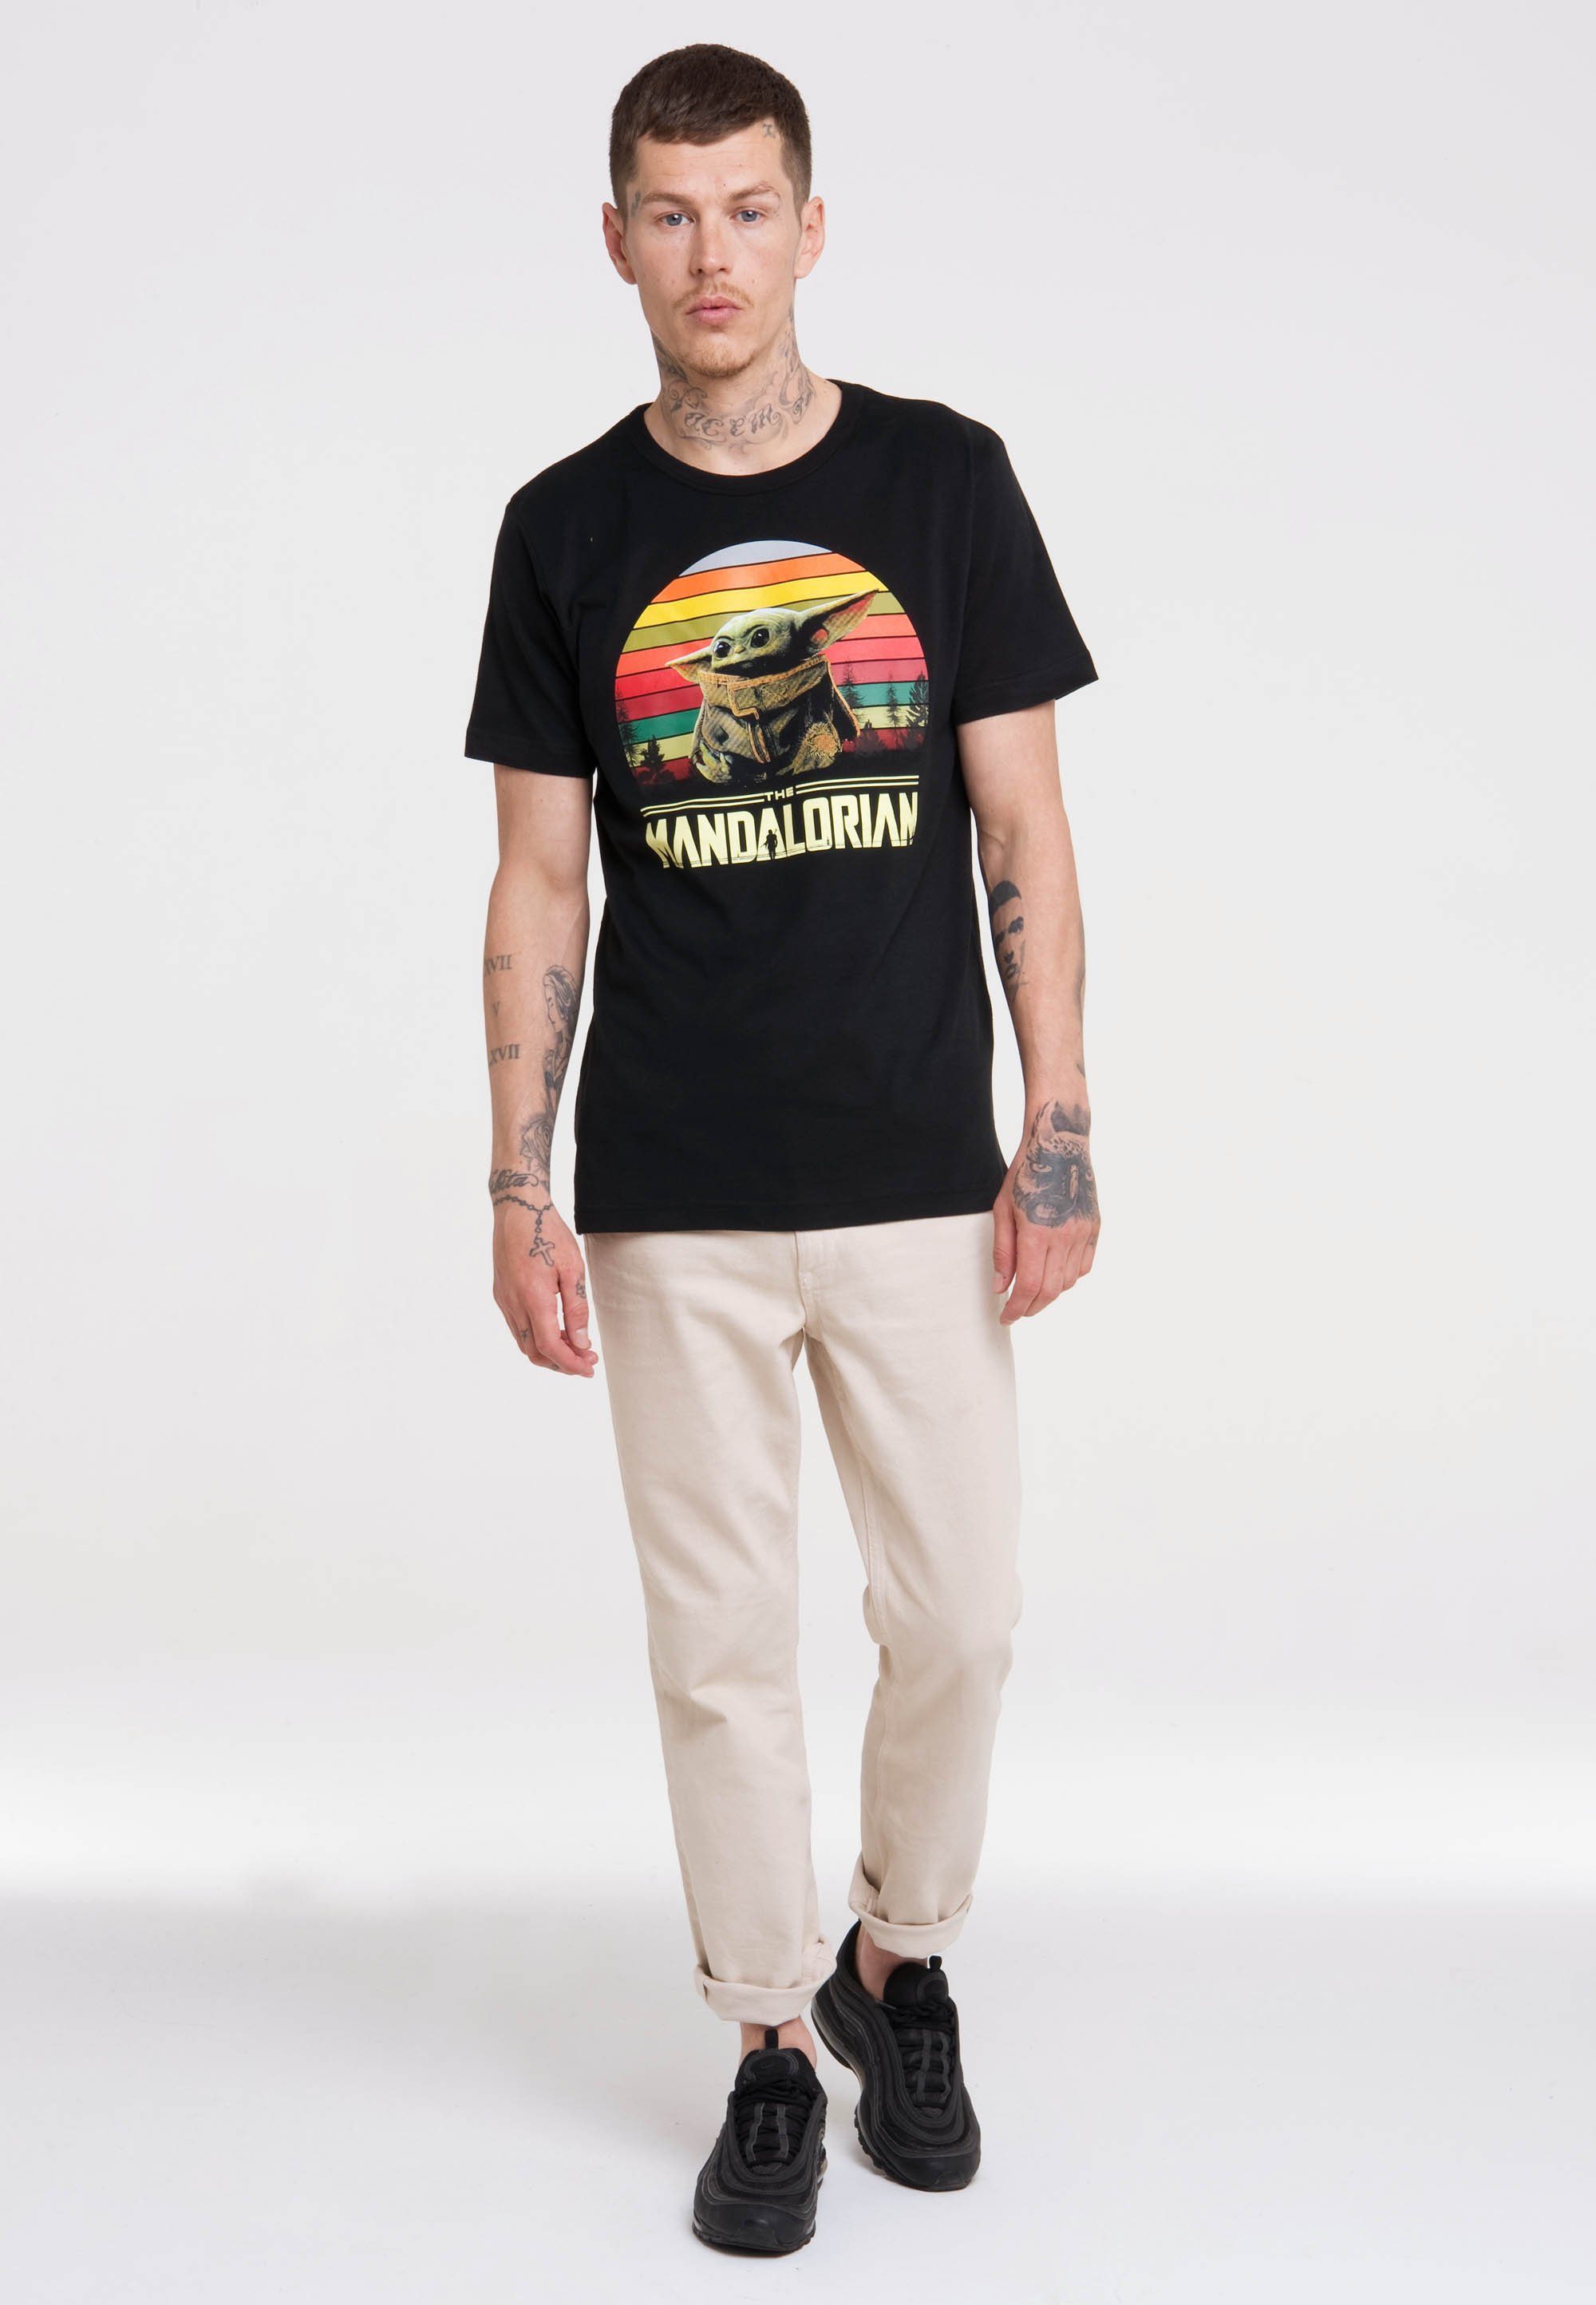 Print – LOGOSHIRT Baby Yoda Star mit lizenziertem T-Shirt Wars